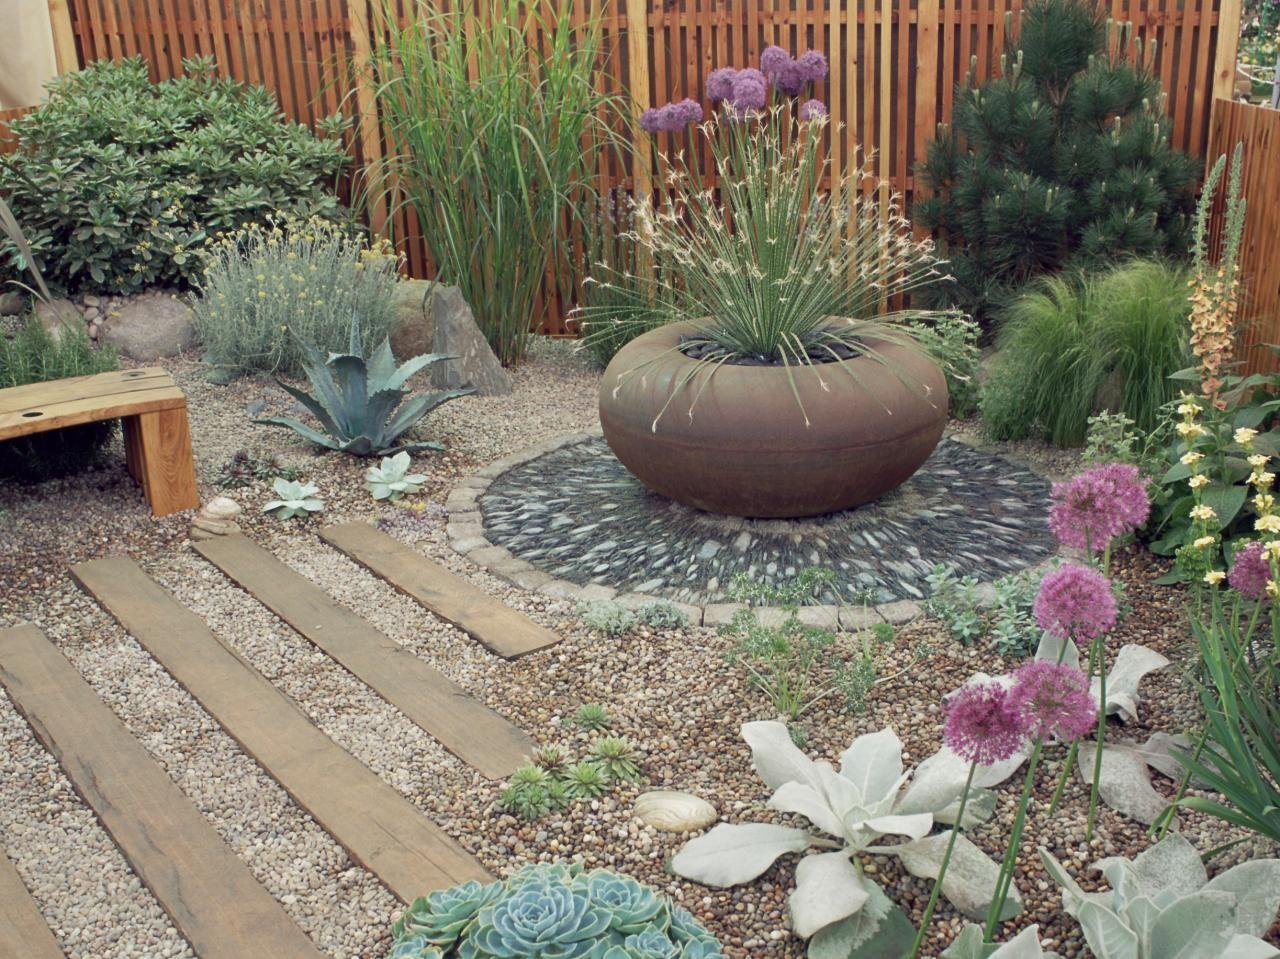 Best ideas about DIY Rockery Garden
. Save or Pin Desert Xeriscape and Rock Gardens Now.